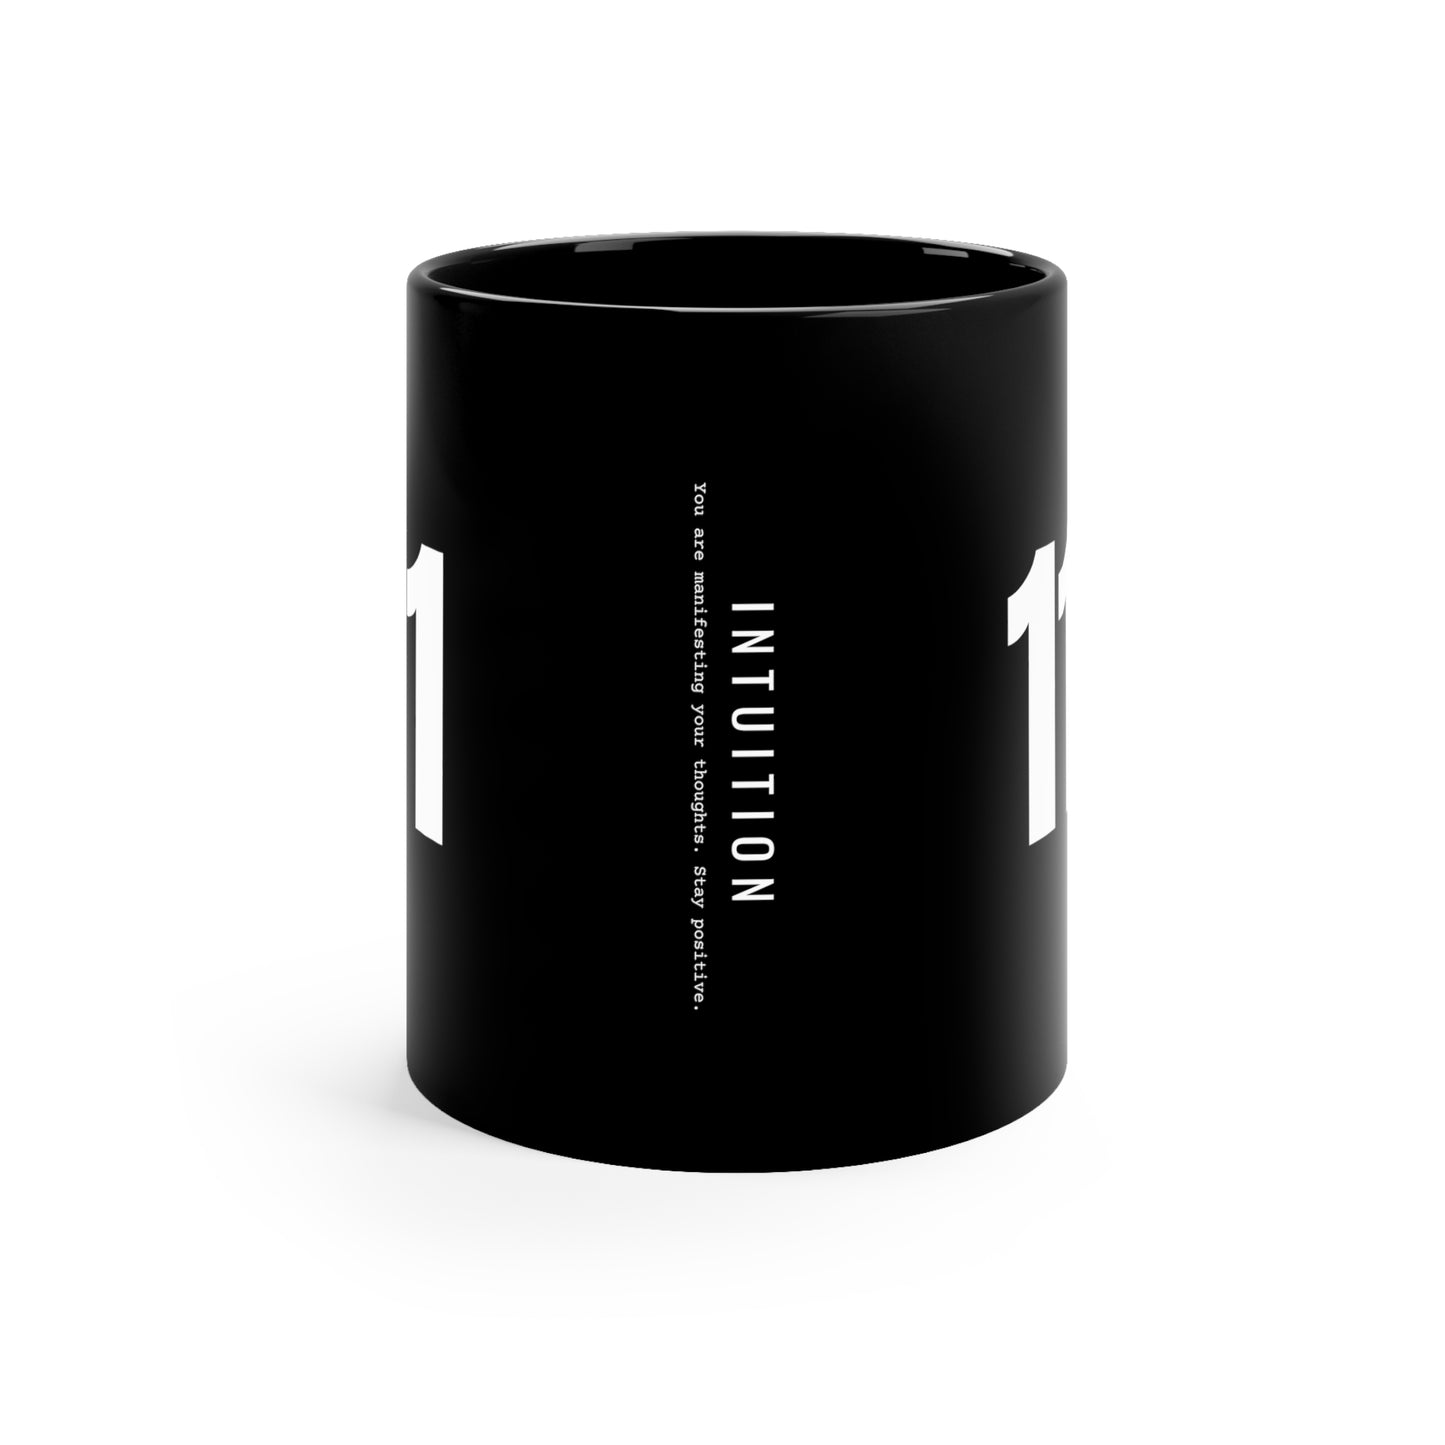 111 Intuitive Coffee Mug (11oz )